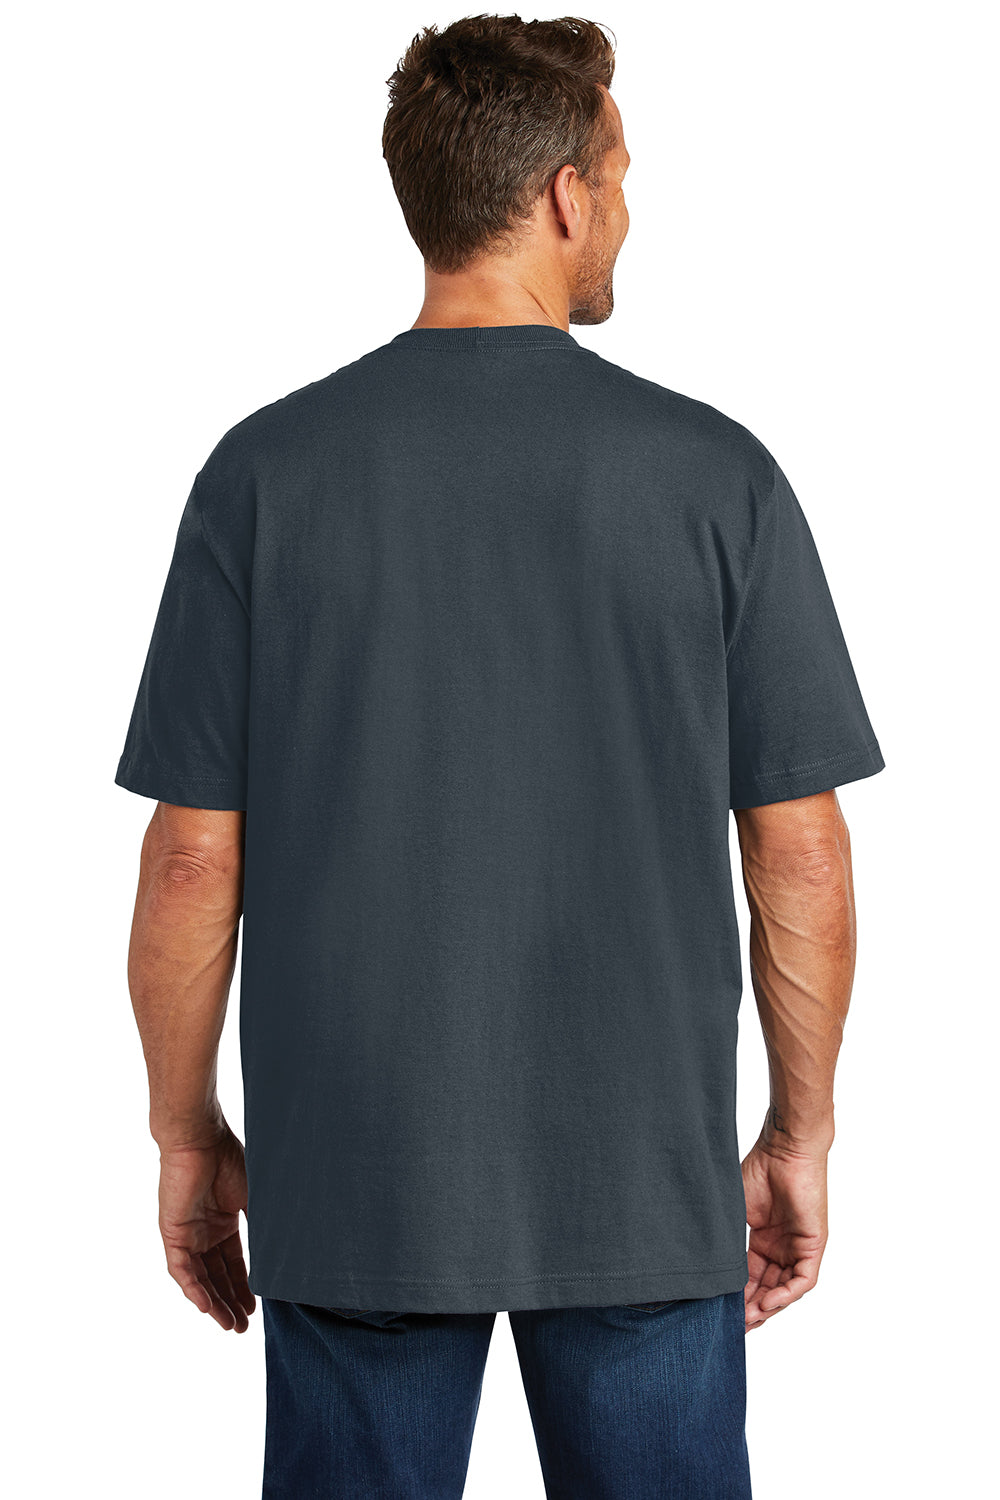 Carhartt CTK87/CTTK87 Mens Workwear Short Sleeve Crewneck T-Shirt w/ Pocket Bluestone Model Back